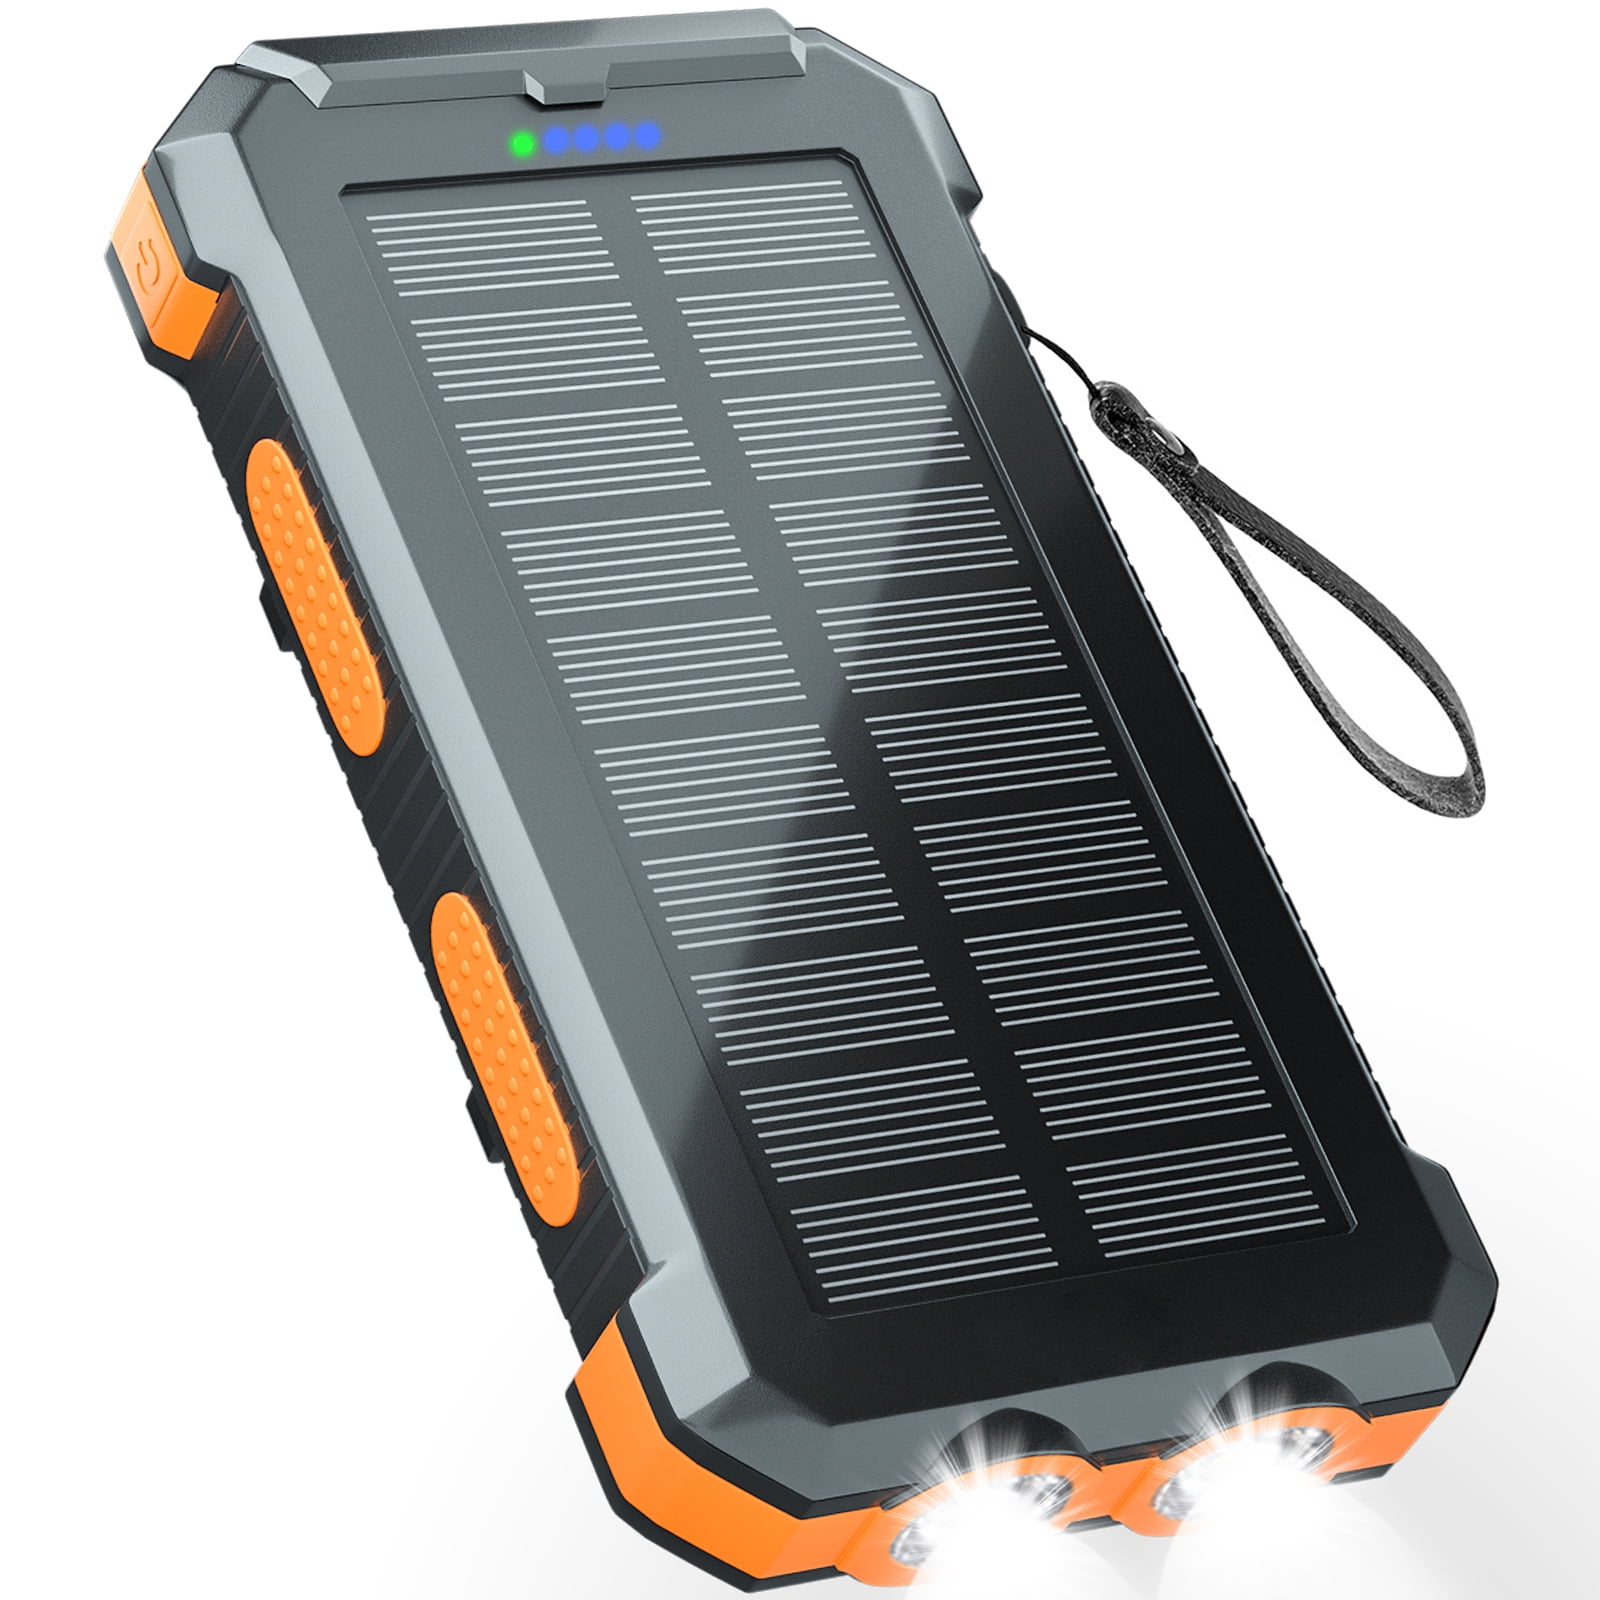 Solar Power Bank 30000mAh Portable Charger with Dual LED Flashlight 5 Output Ports 2 Input Ports Quick Charge 3.0 Solar Charger Power Bank for iPhone iPad Samsung Orange 